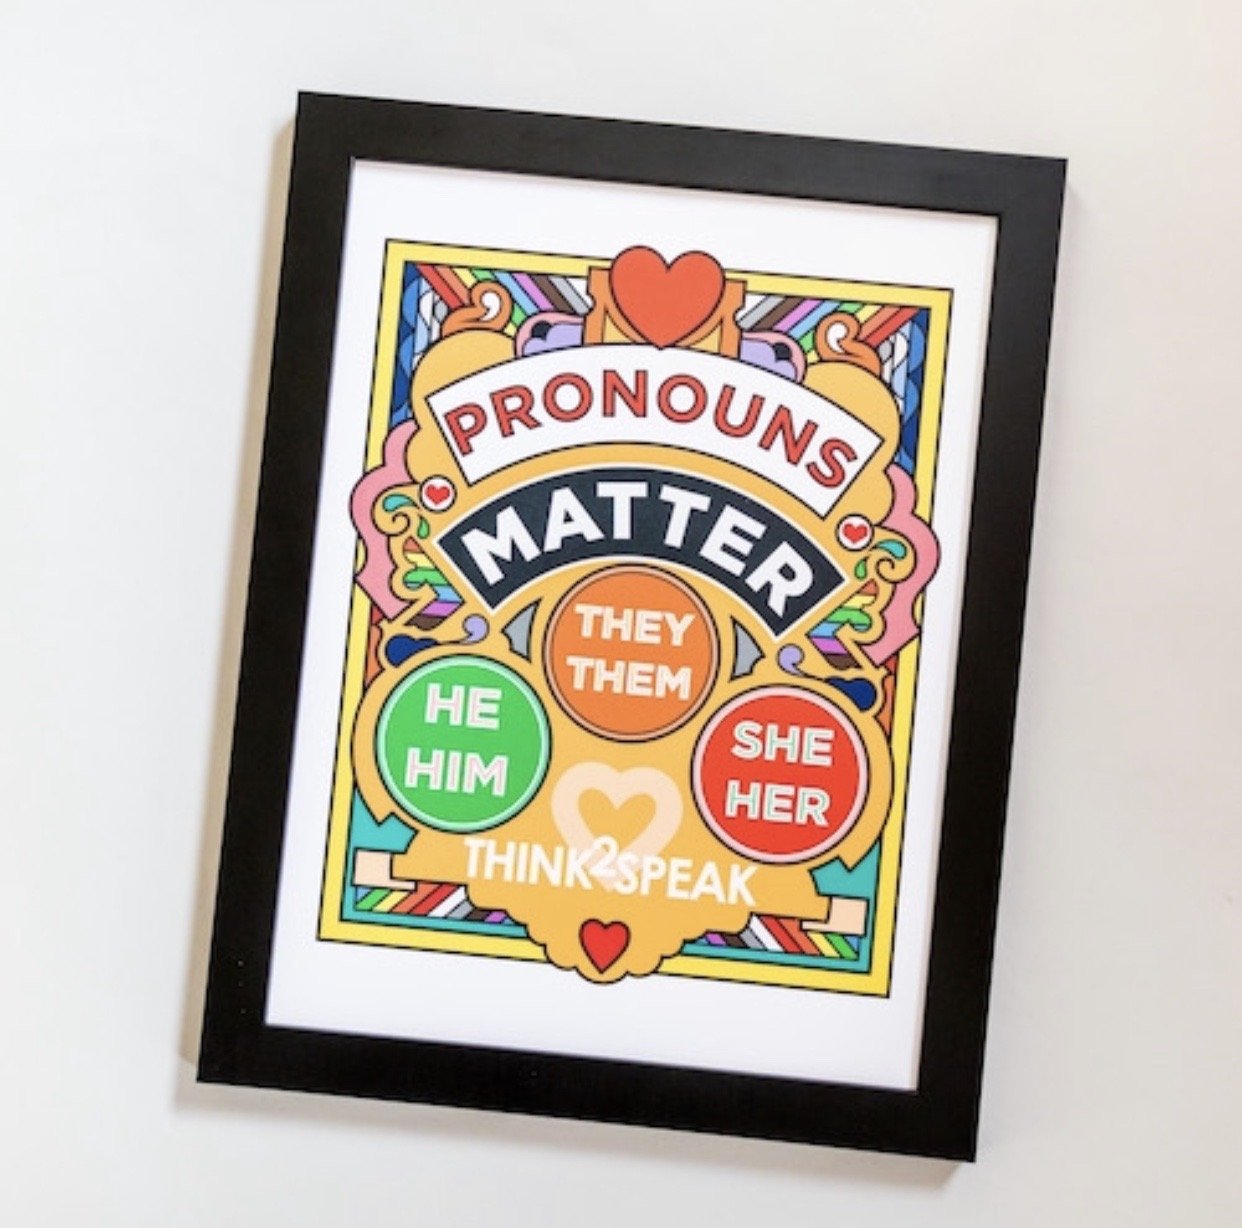 Pronouns Matter poster 